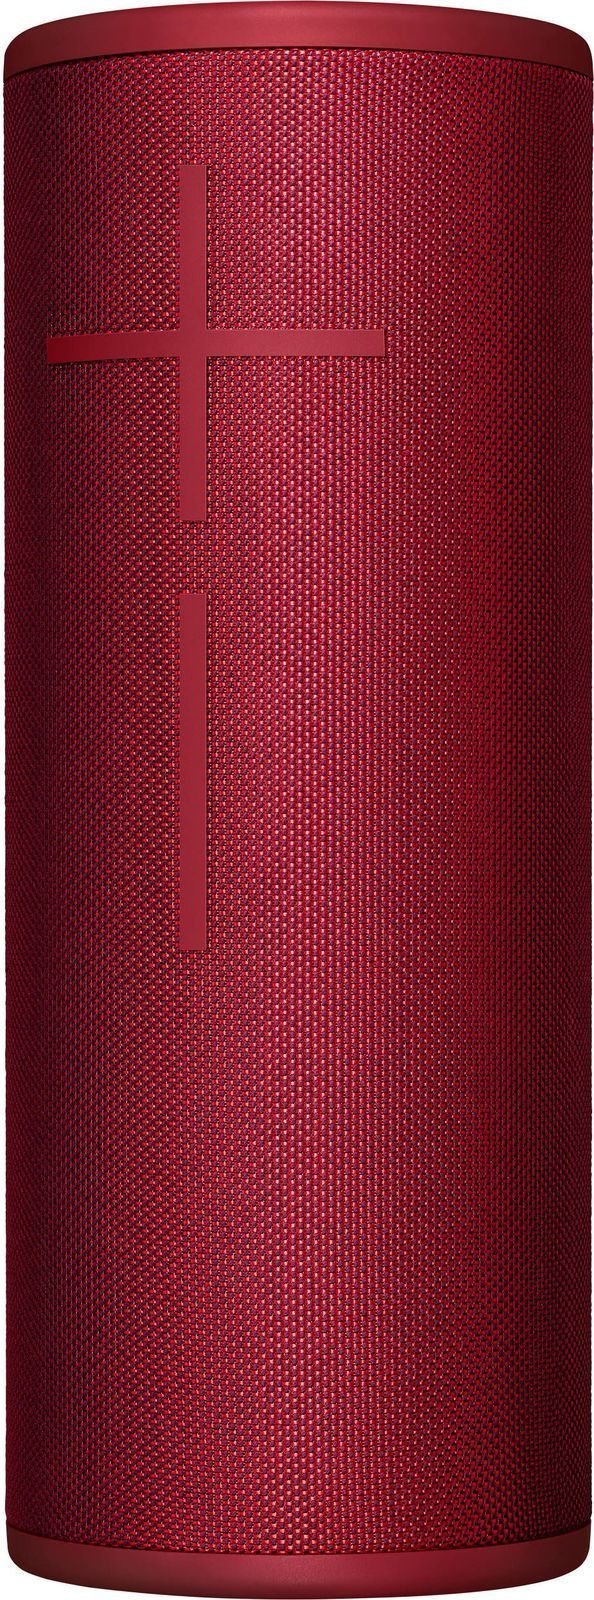 Enceintes portable Logitech Ultimate Ears Megaboom 3 Sunset Red